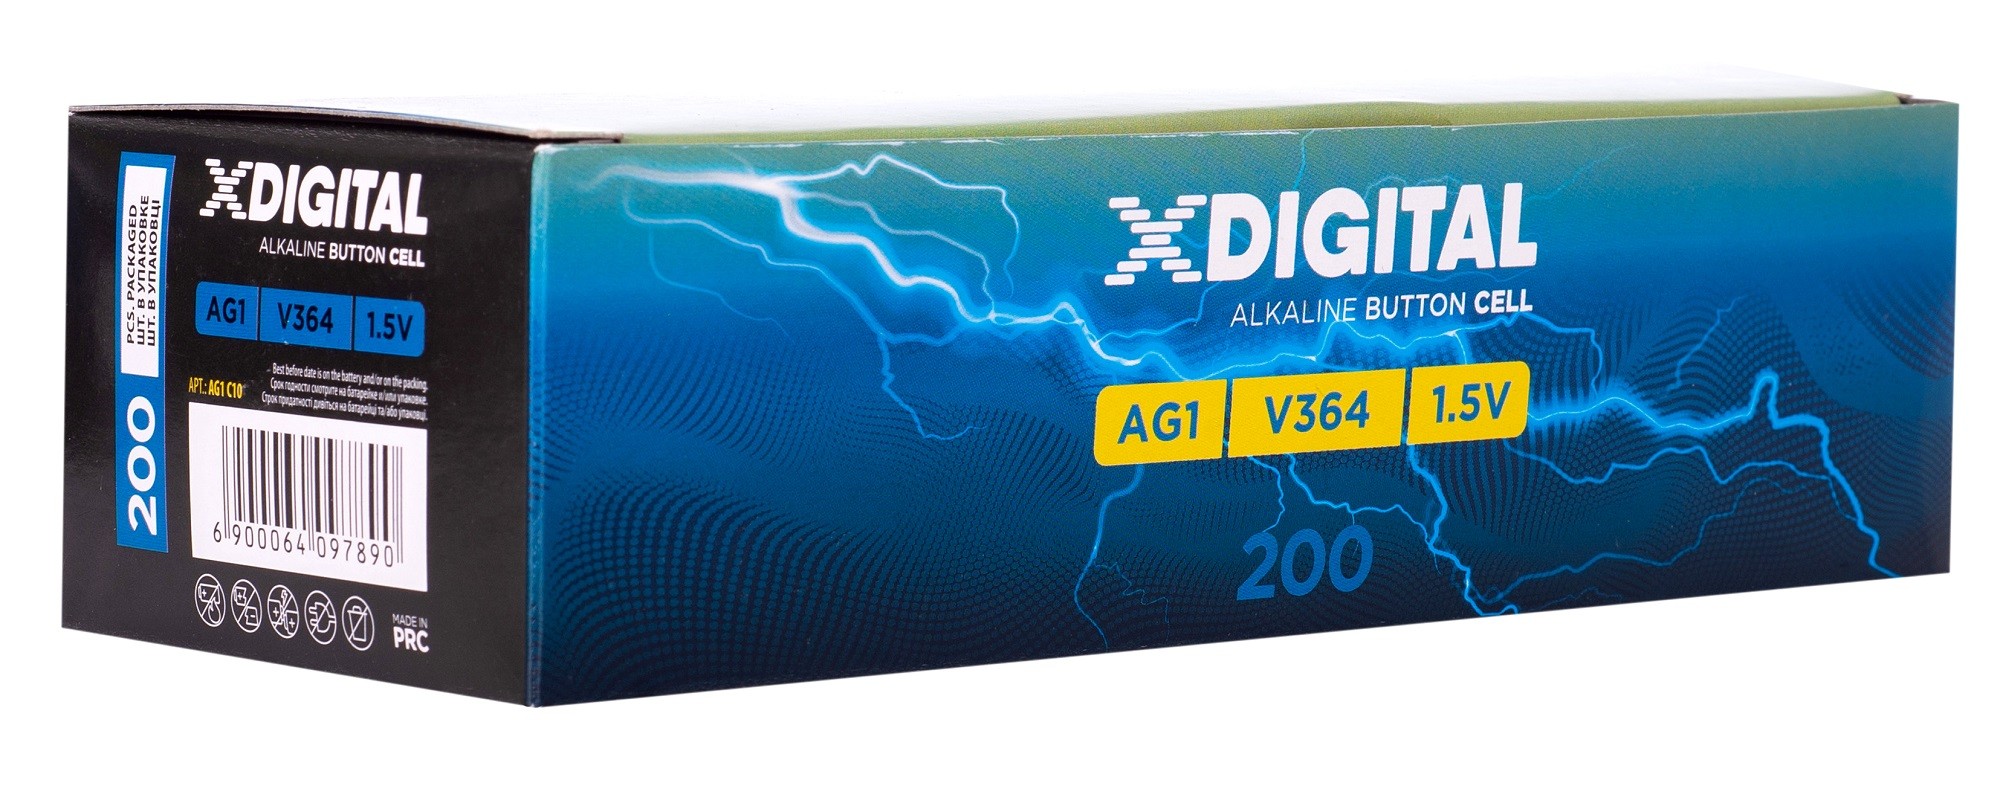 Батарейка X-Digital AG1 V364 цена 15.40 грн - фотография 2